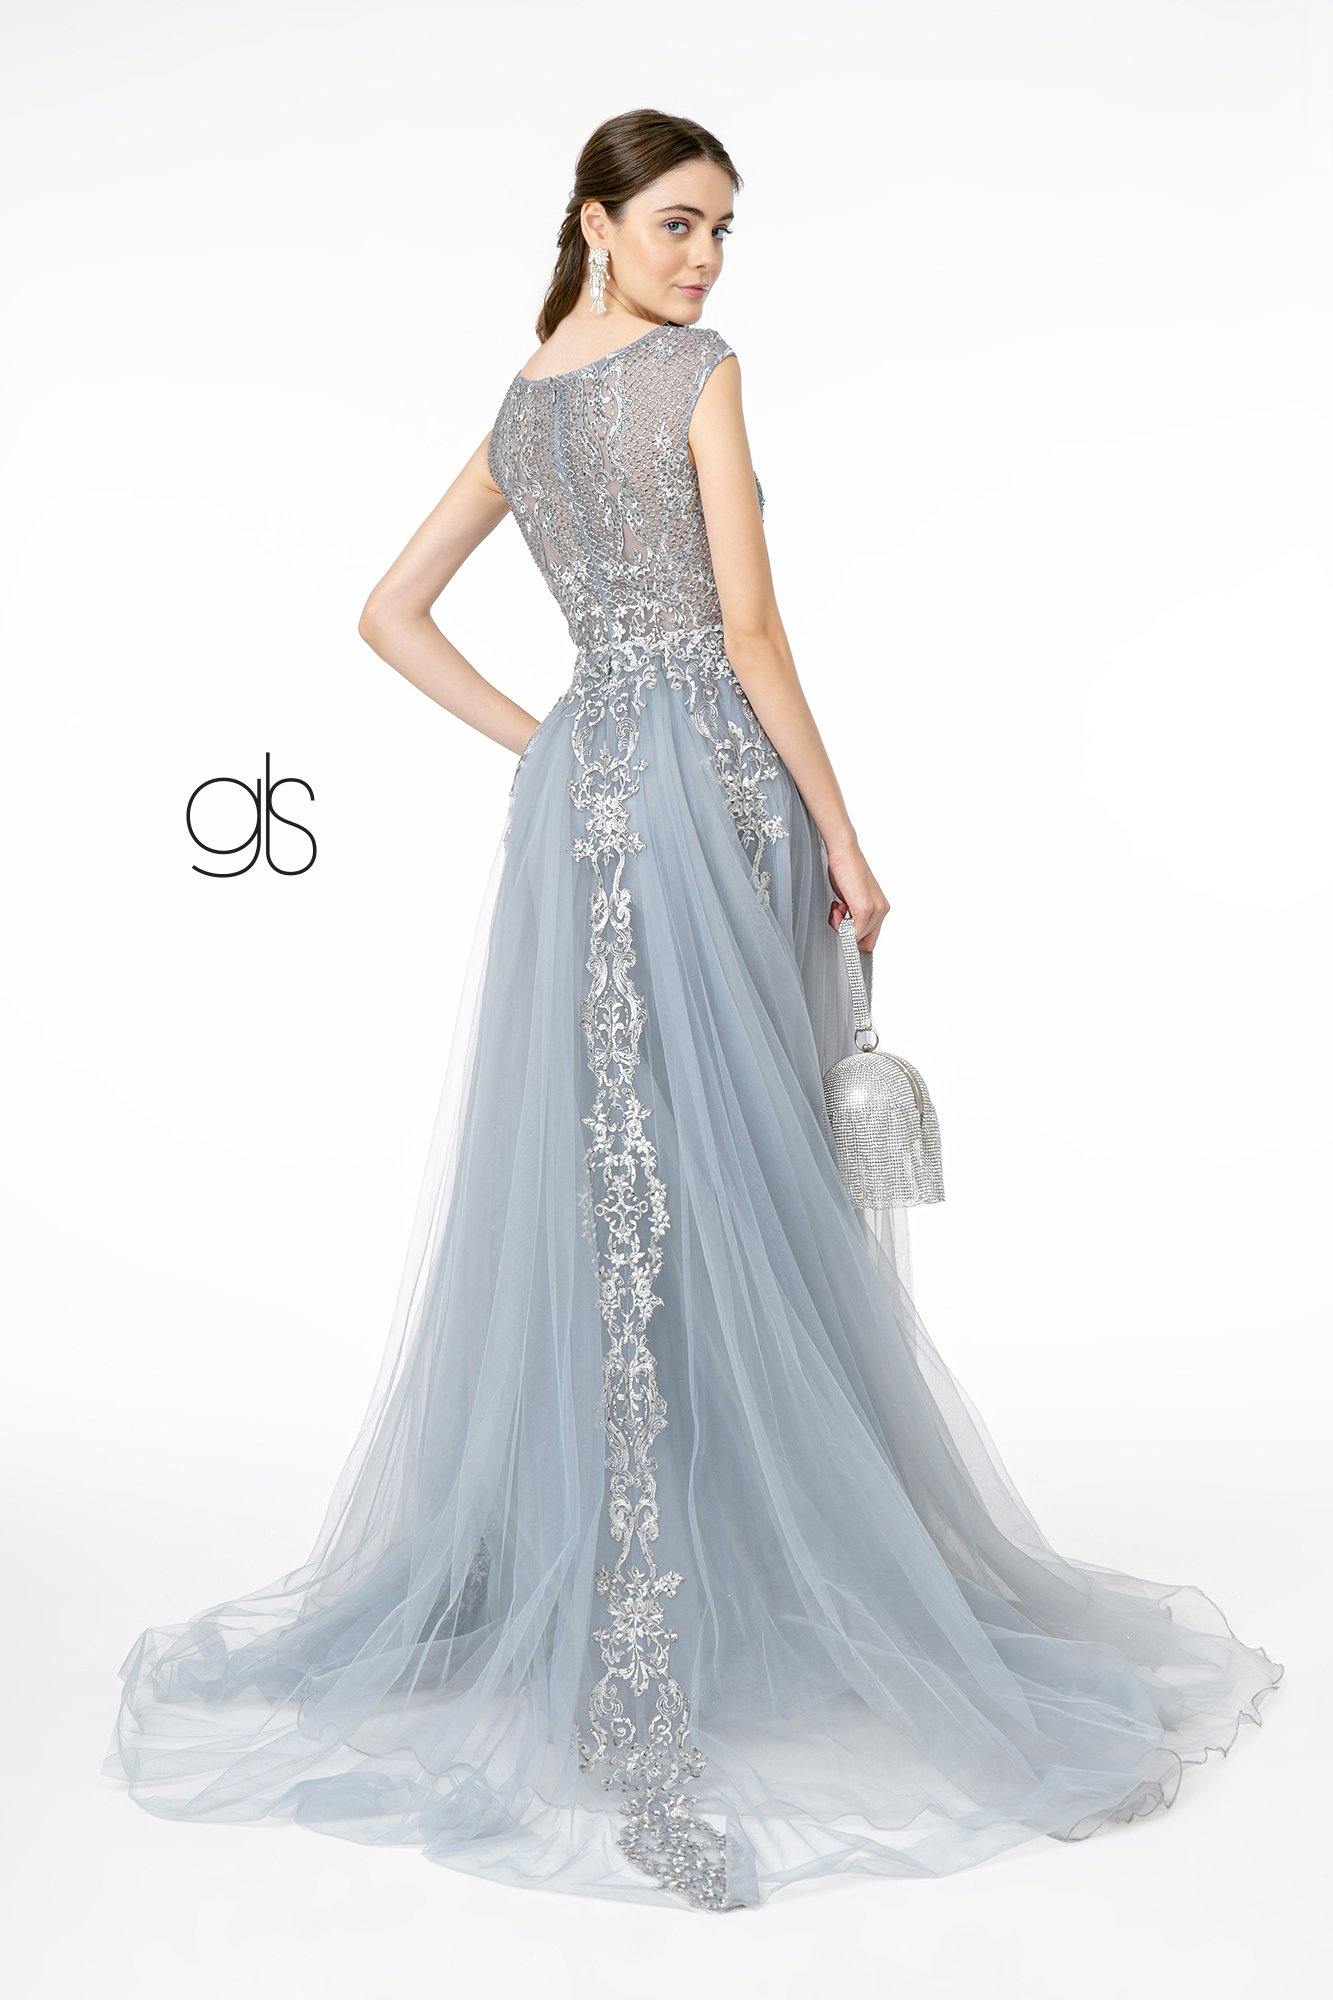 Embroidered Mesh A-Line Long Prom Dress - The Dress Outlet Elizabeth K